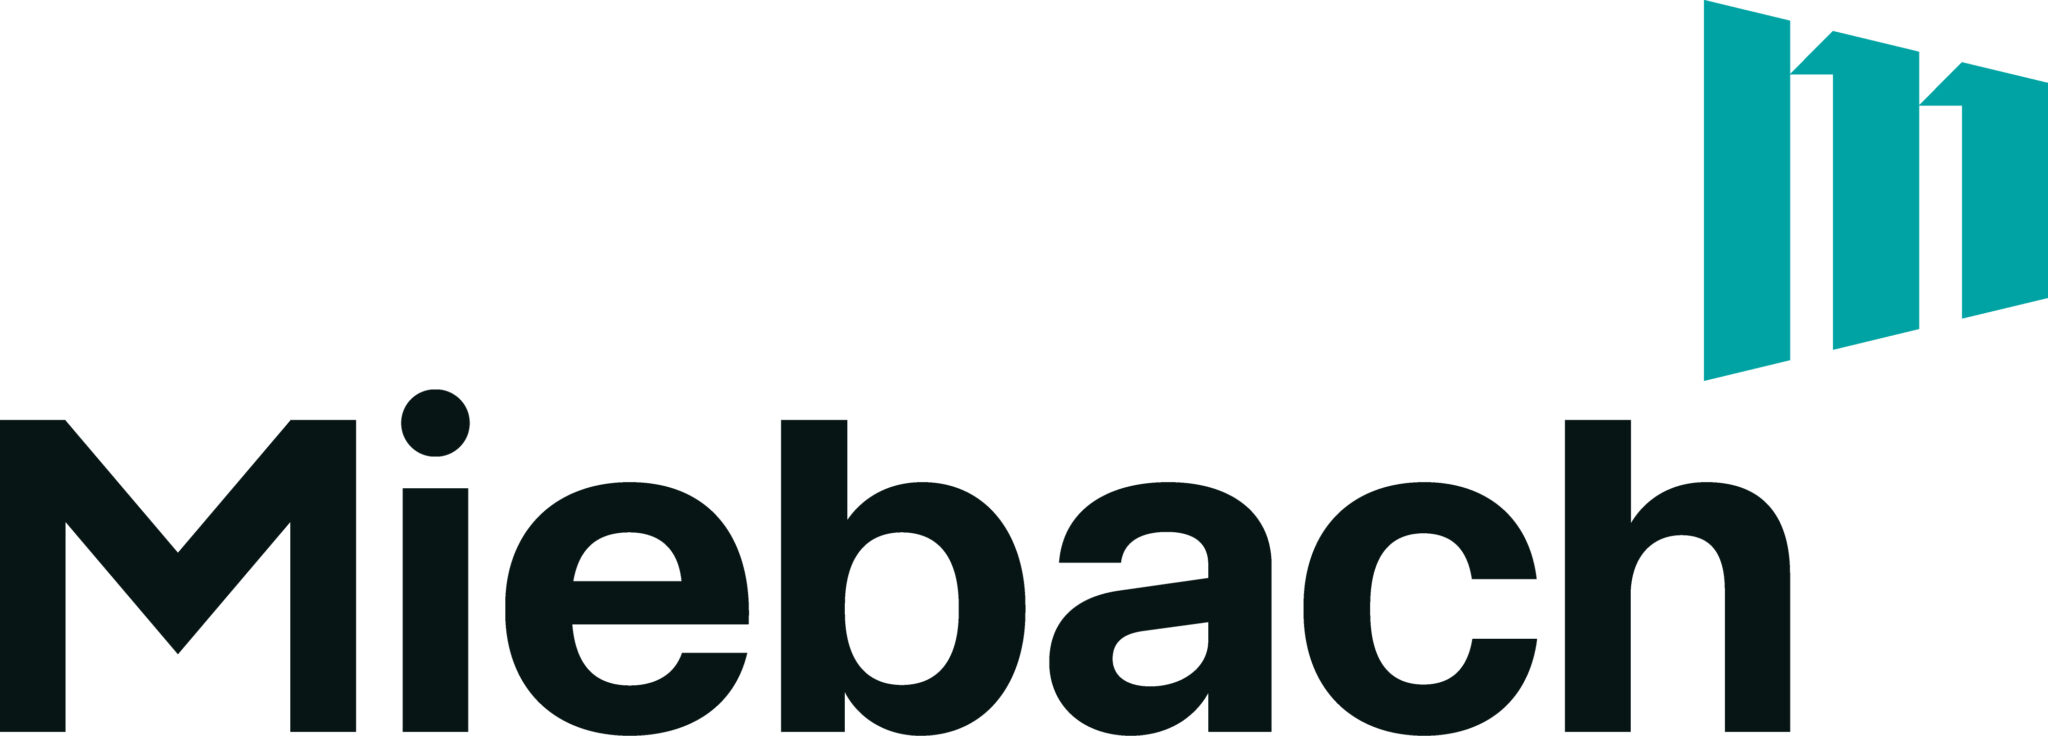 Miebach-logo-primary-RGB